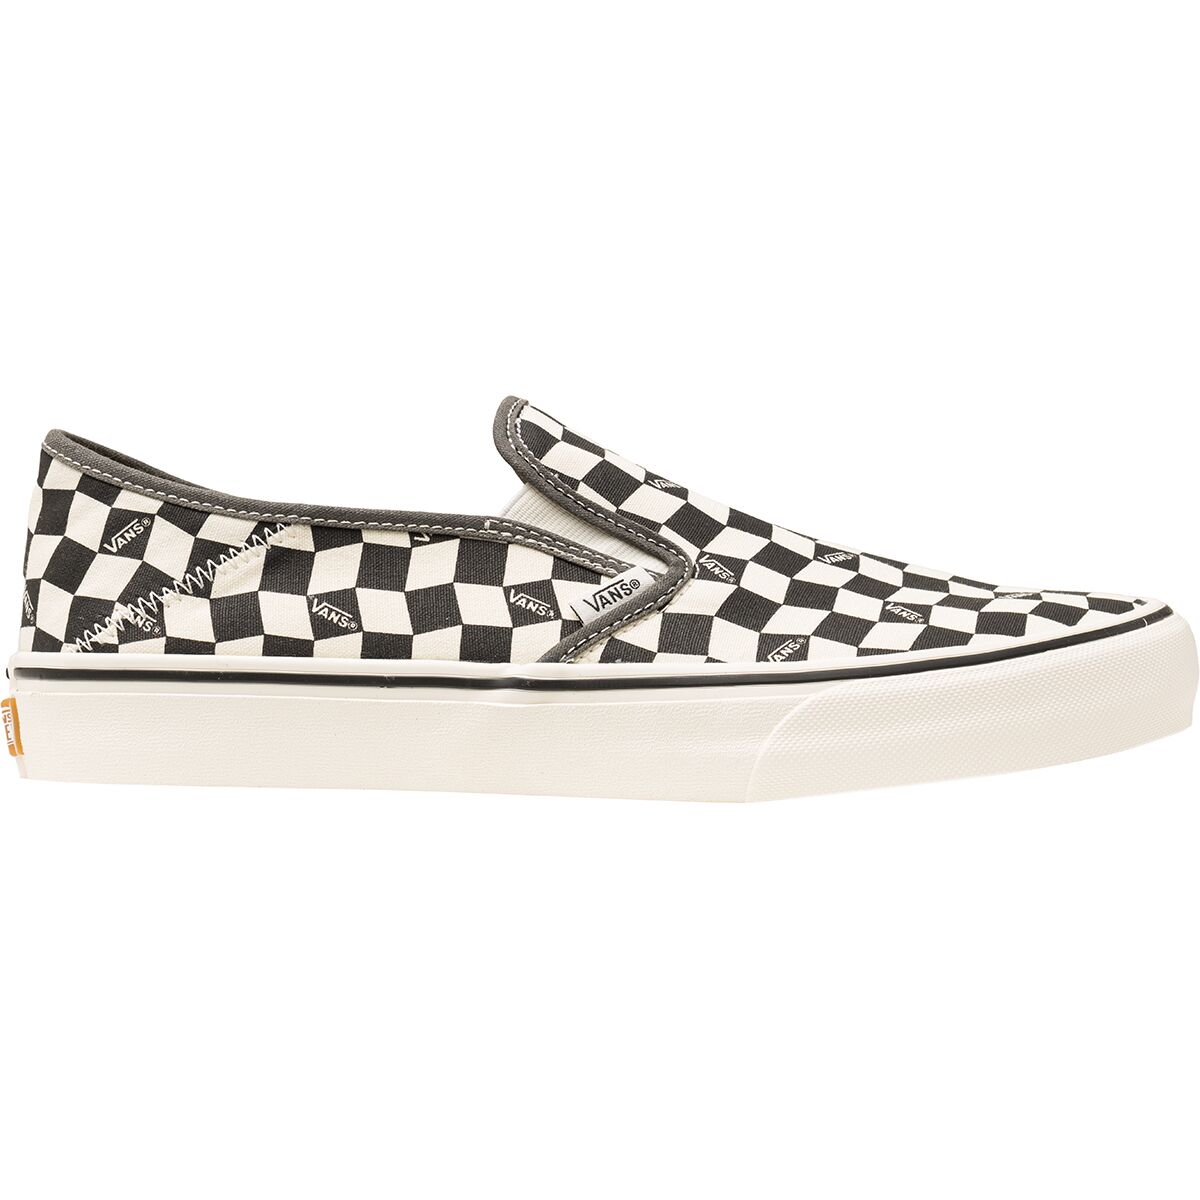 Vans Checkerboard Slip-On SF Shoe - Men